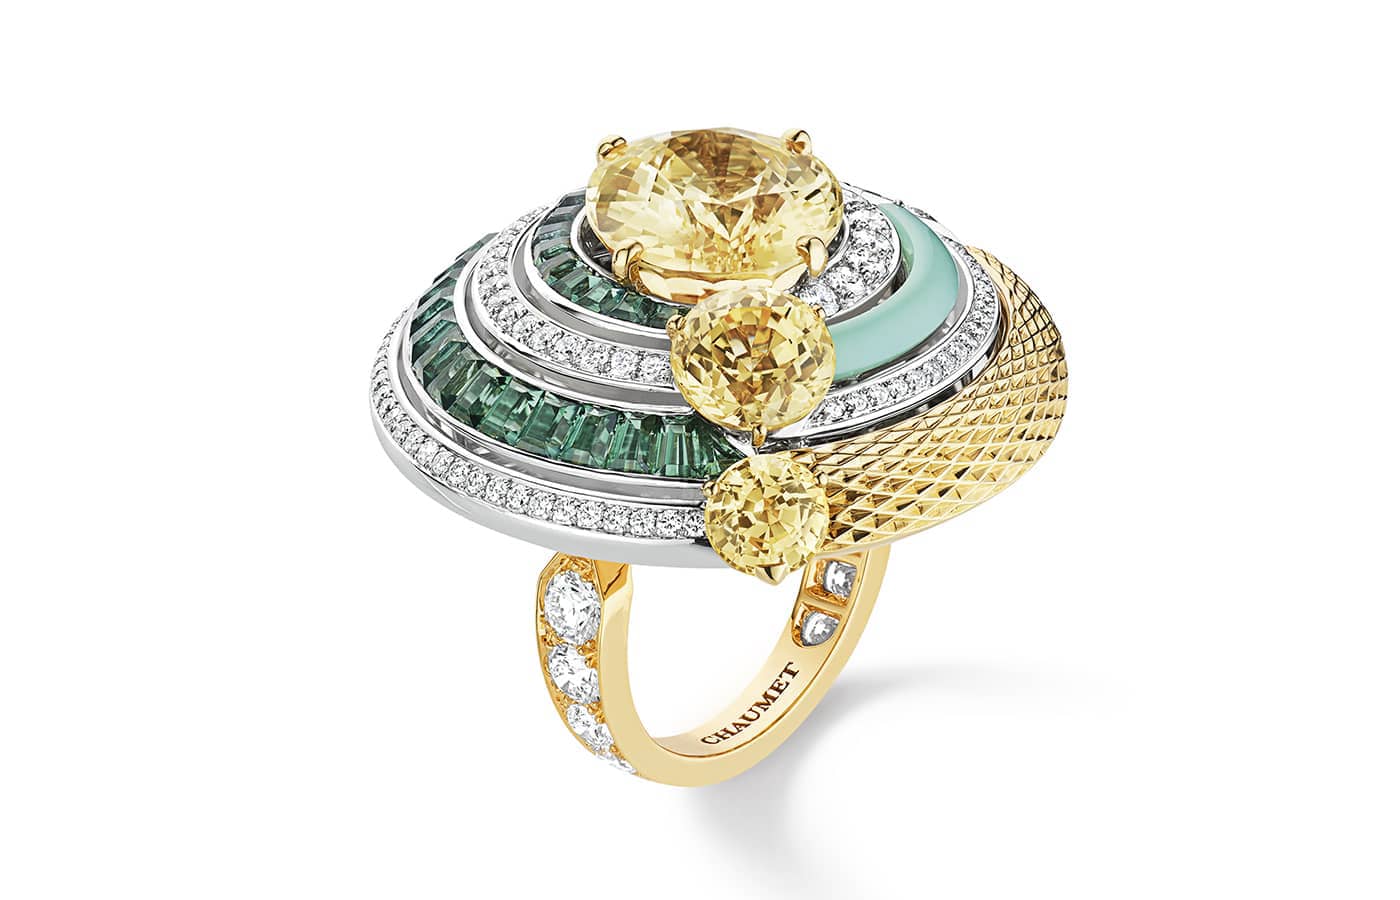 Vivienne Celebration Pendant, Yellow Gold, White Gold, Titanium, Diamonds  and Colored Gemstones - Jewelry - Categories